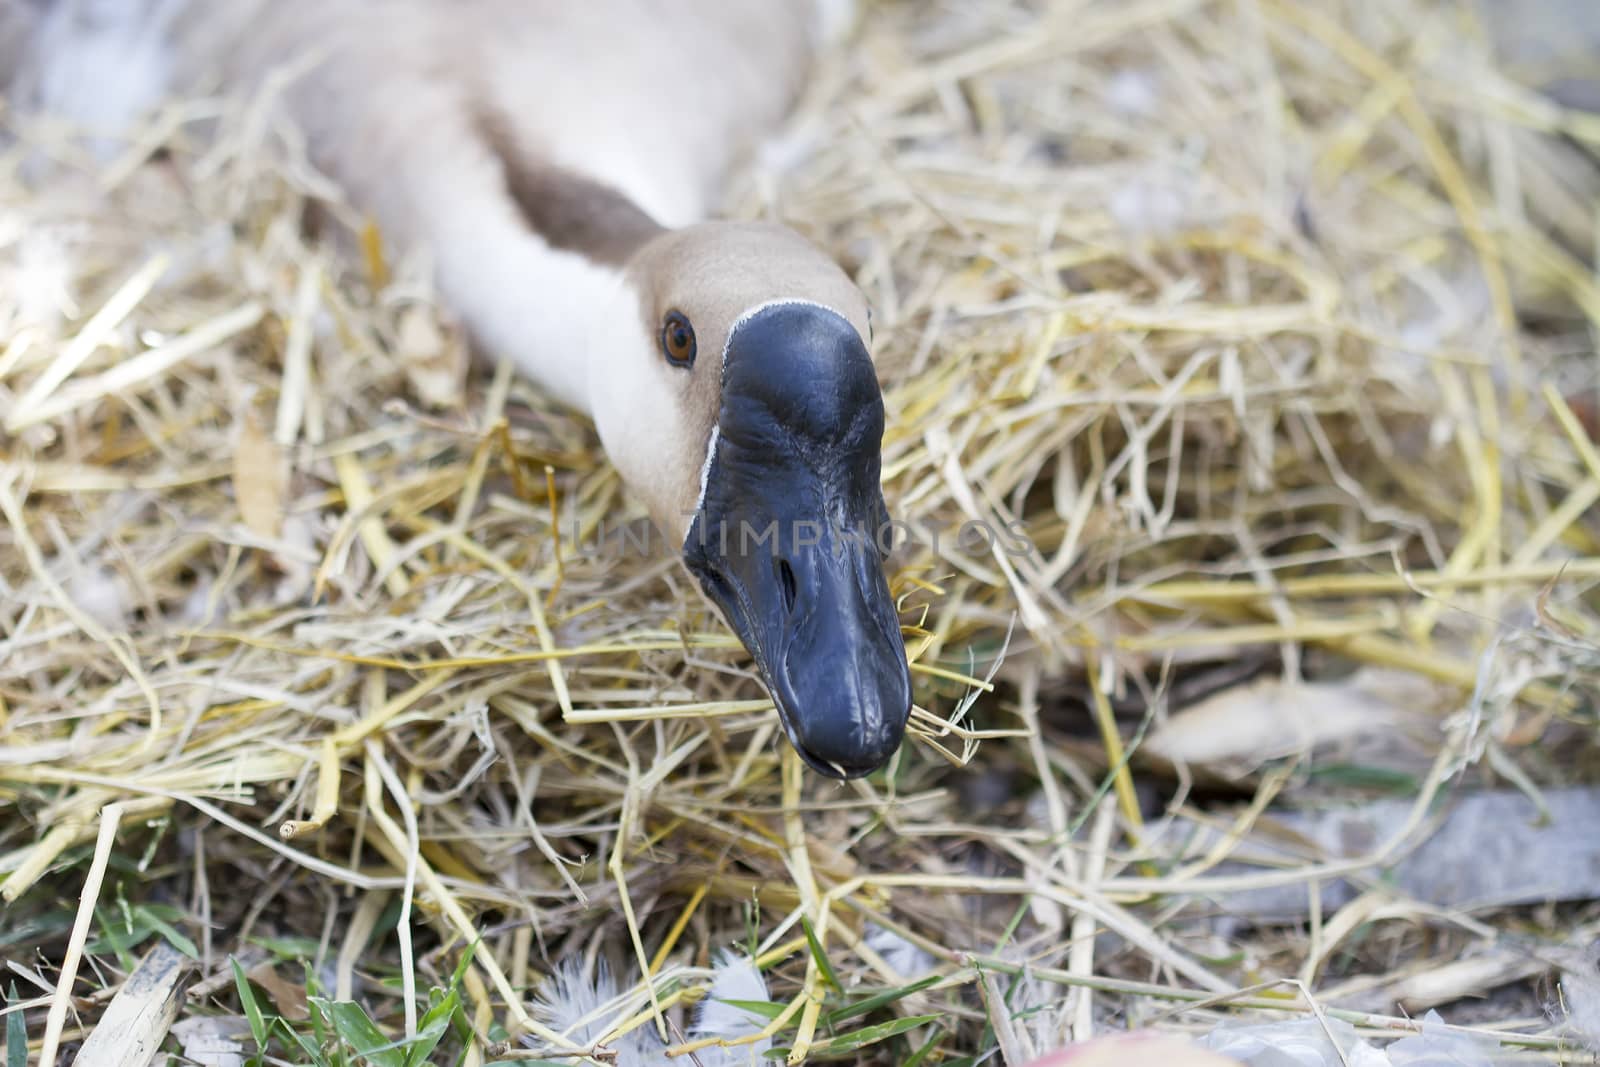 Goose hatch eggs in goose's nest by TakerWalker